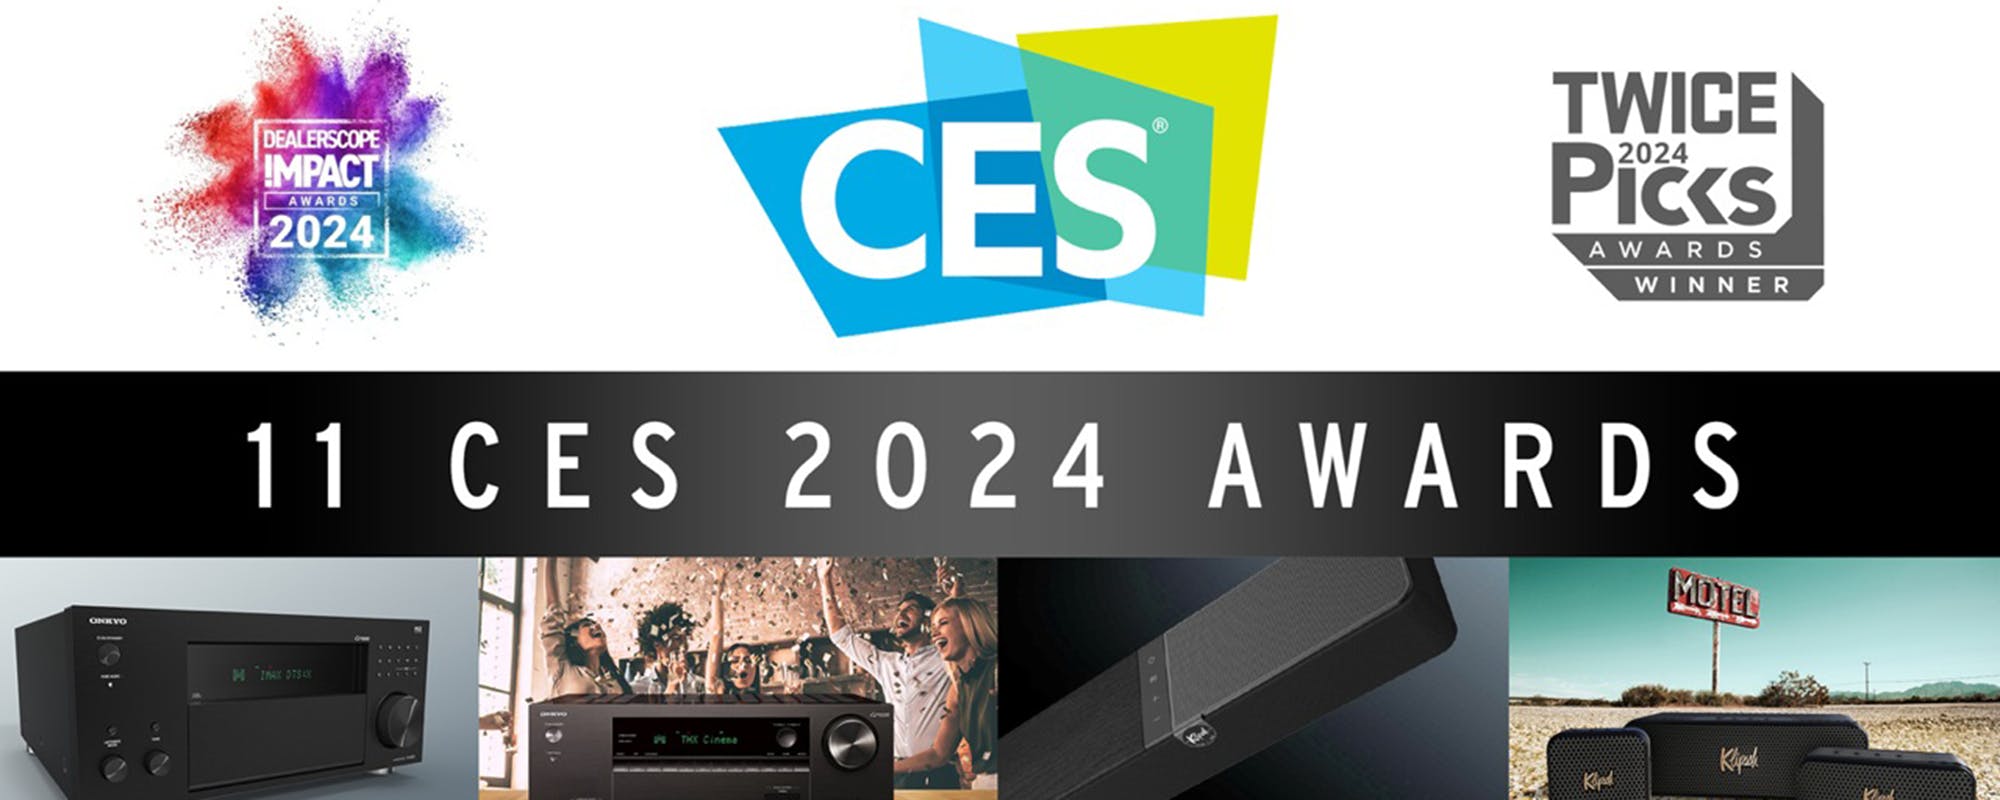 CES Awards 2024 2000x800